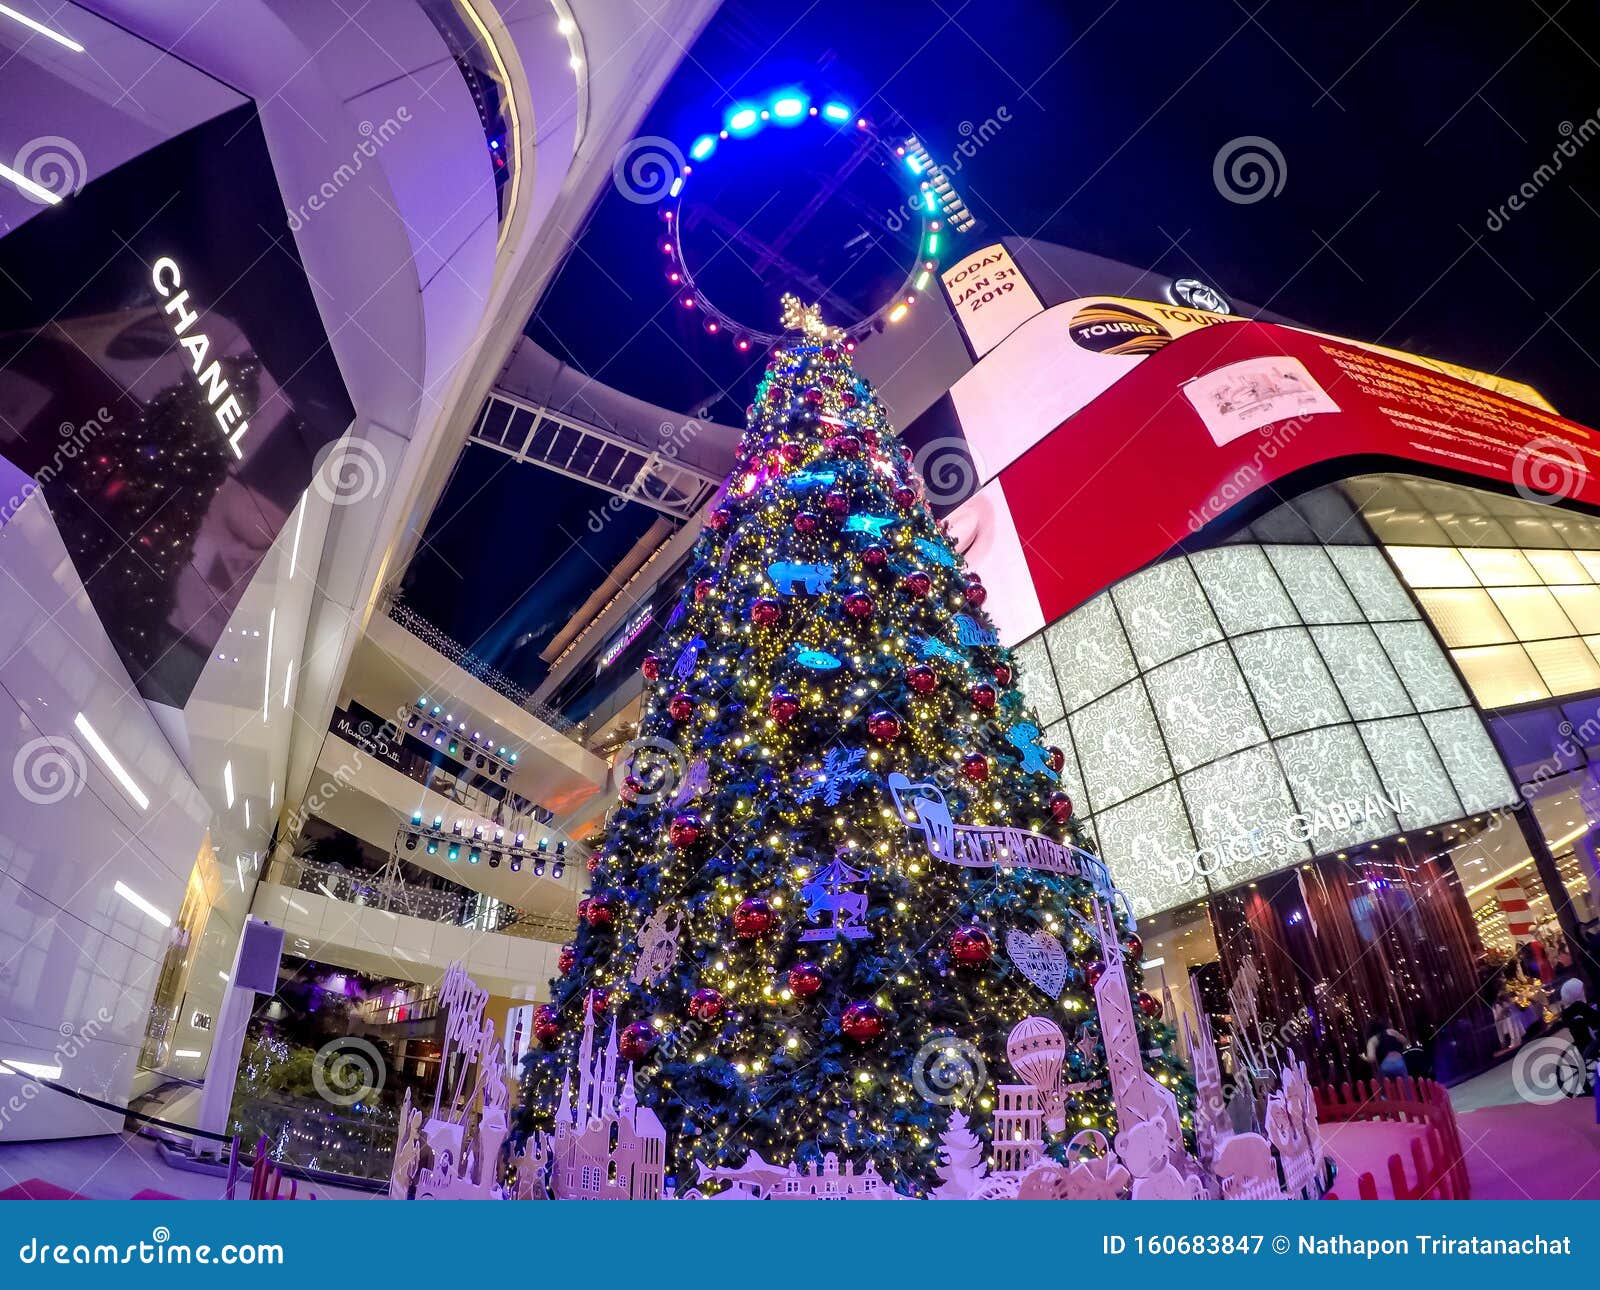 Emquartier Shopping Mall Sukhumvit Road Bangkok Thailand On December 18 2018 Light Up Large Christmas Tree To Celebrate Christmas Editorial Photography Image Of Phong Emquartier 160683847